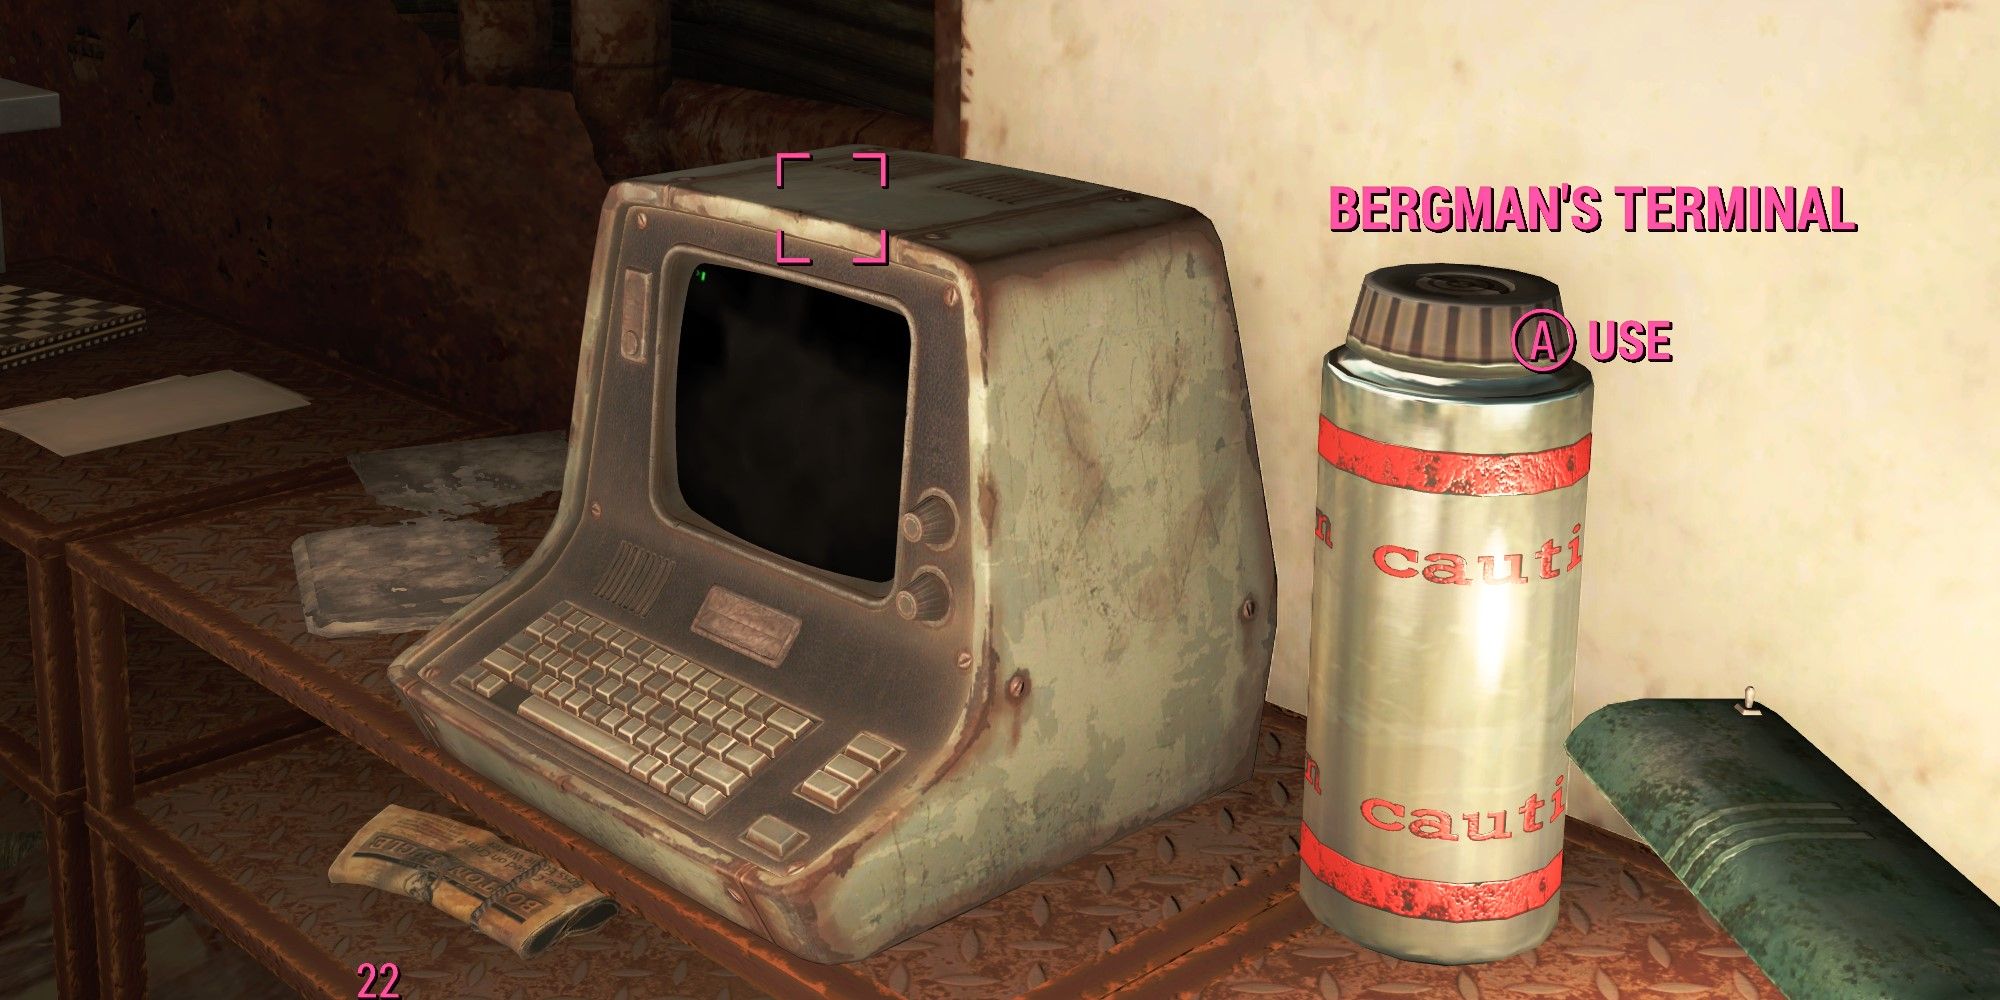 Fallout 4 Cambridge Polymer Labs Bergman's Terminal on desk